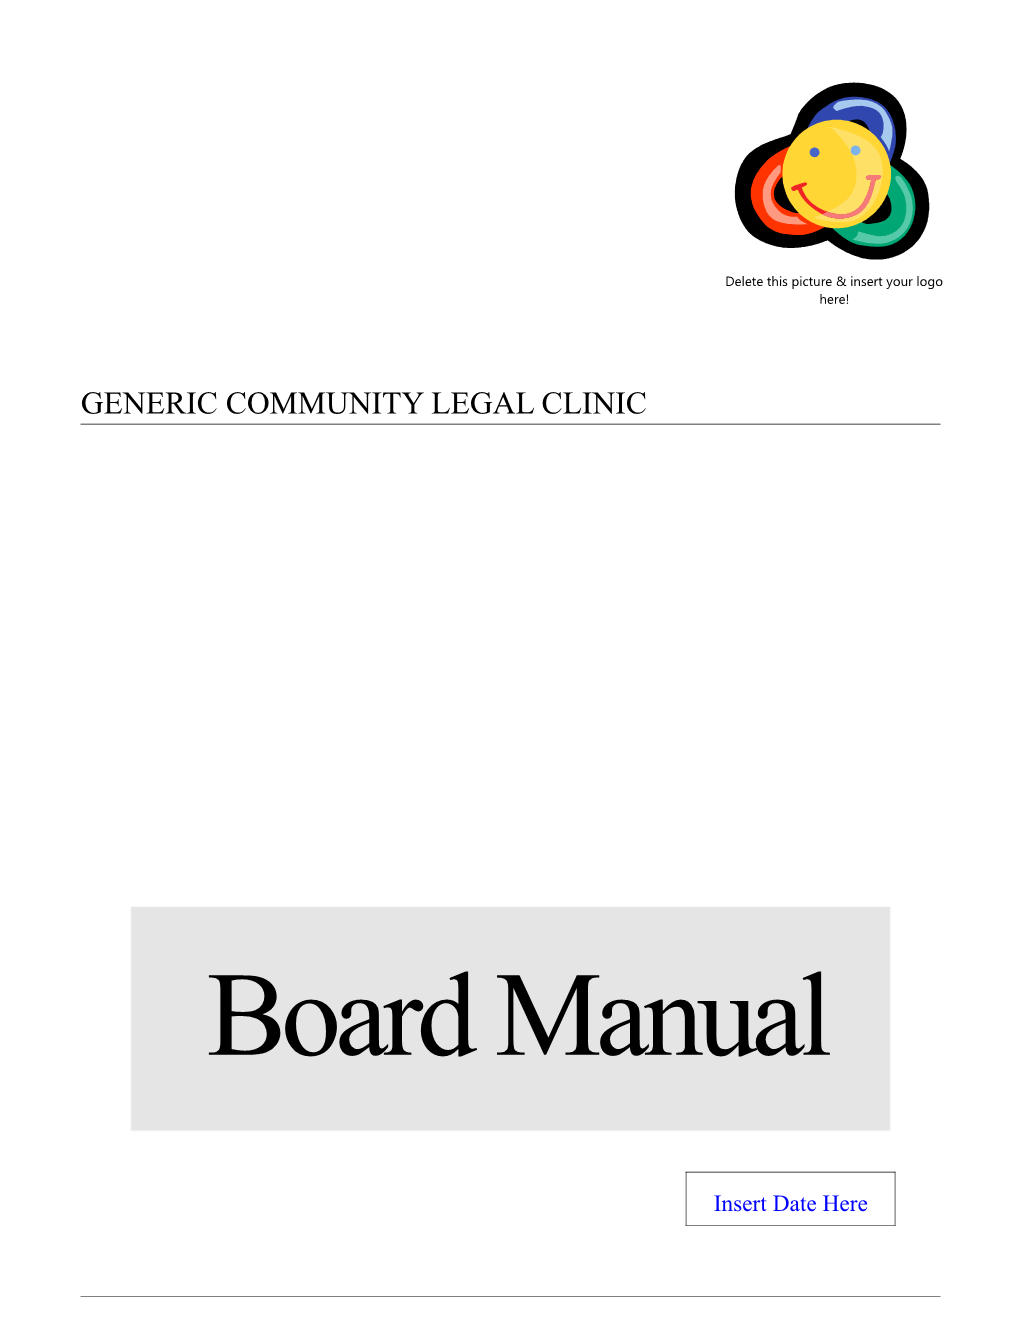 Generic COMMUNITY Legal Clinic